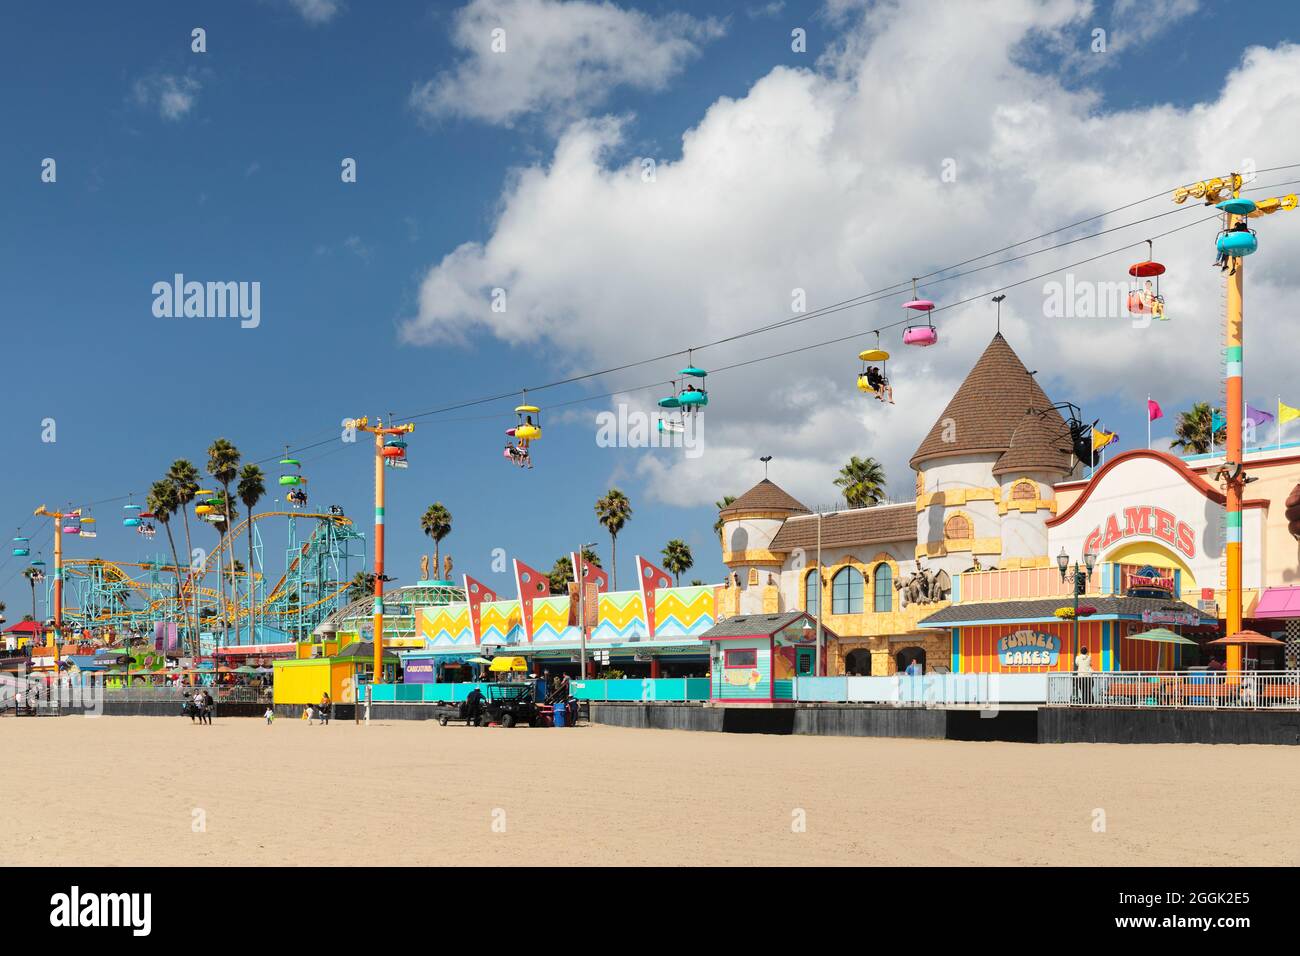 Amusement park on Santa Cruz Beach Board Walk, California, USA Stock Photo